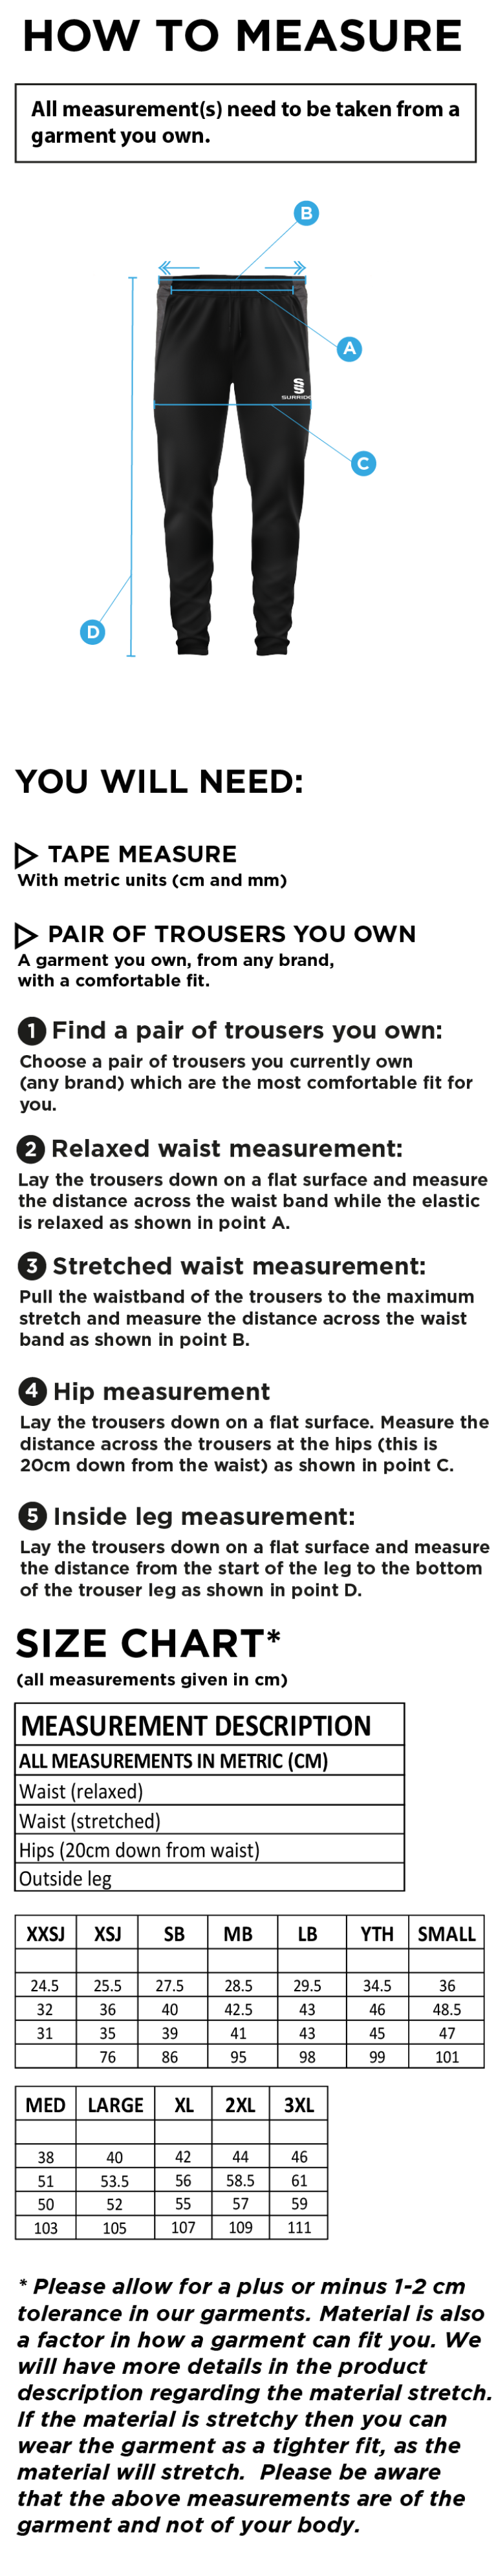 Tek Slim Training Pants : Navy - Size Guide